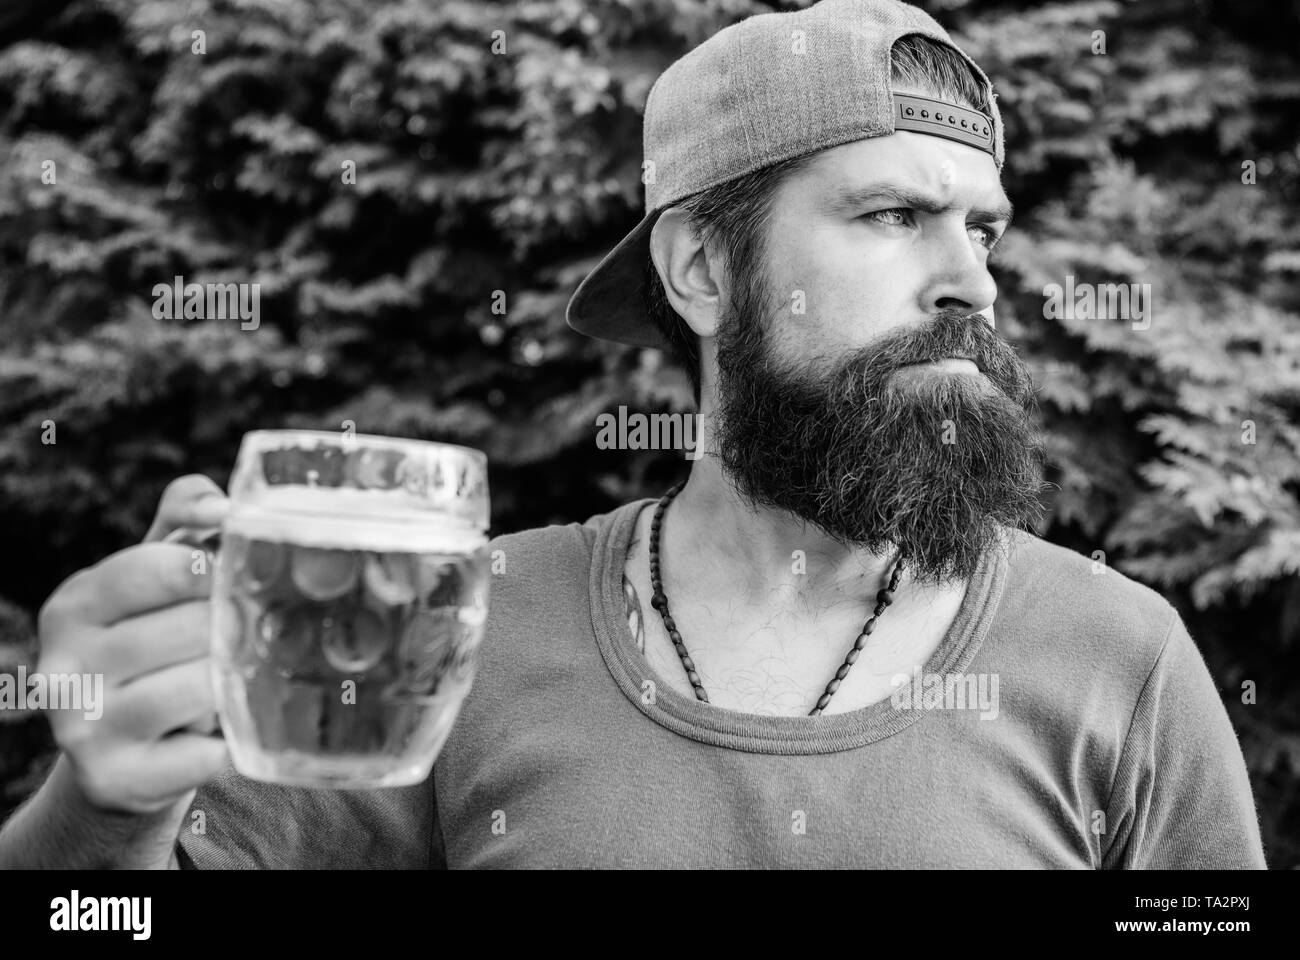 On break. Man drinker holding beer mug outdoors. Brutal hipster having craft beer on summer day. Bearded man enjoy drinking beer on nature. Beer me. Stock Photo